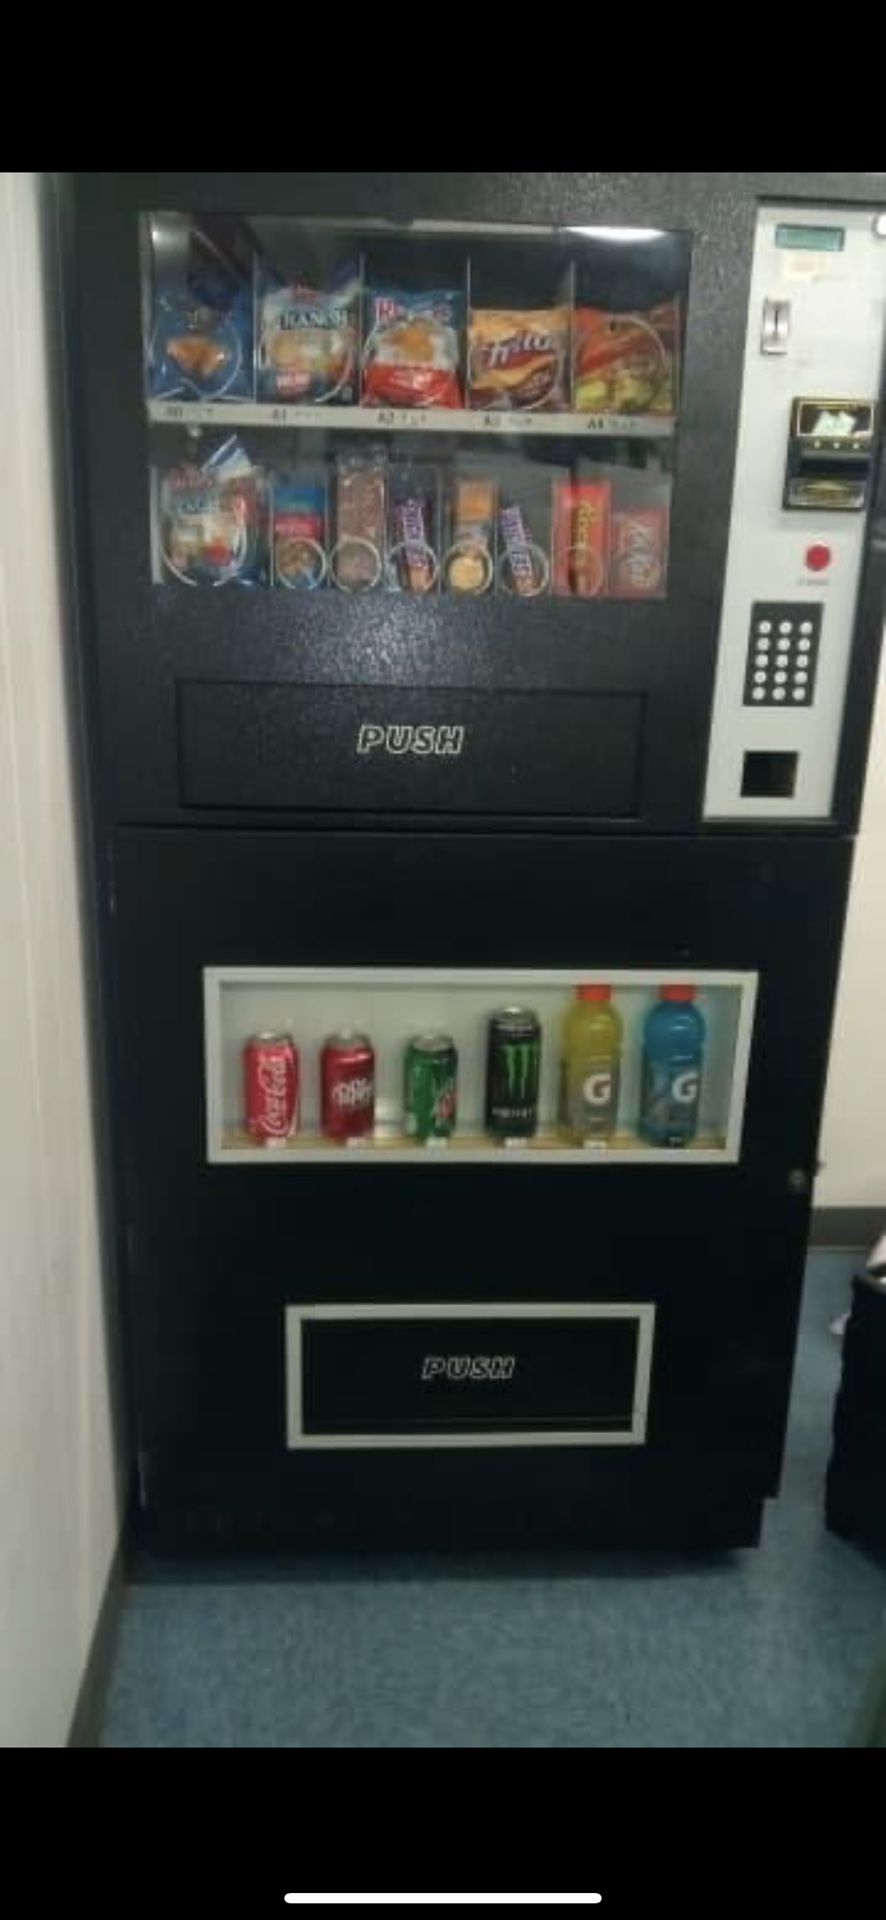 Snack Vending Machine 